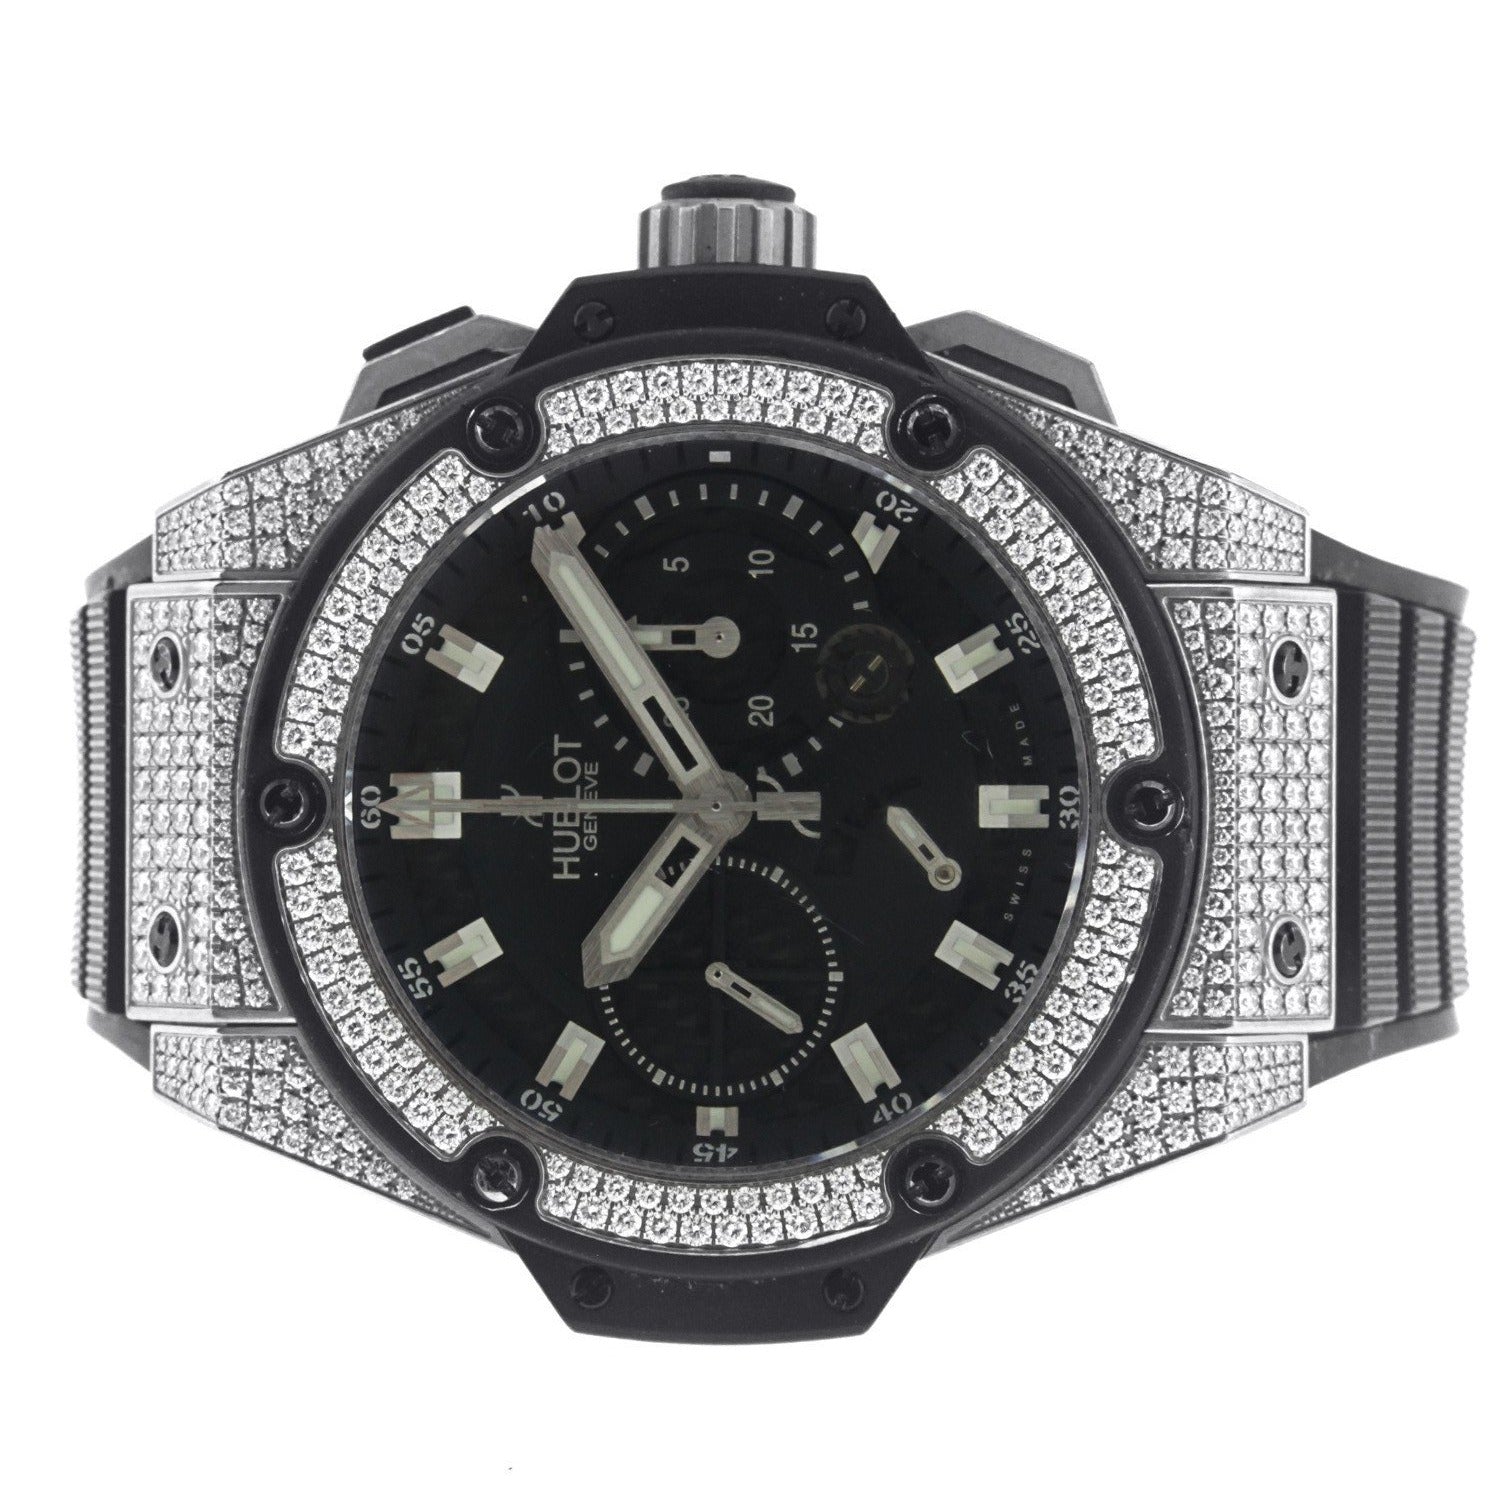 Hublot Luxury Watch, Unisex